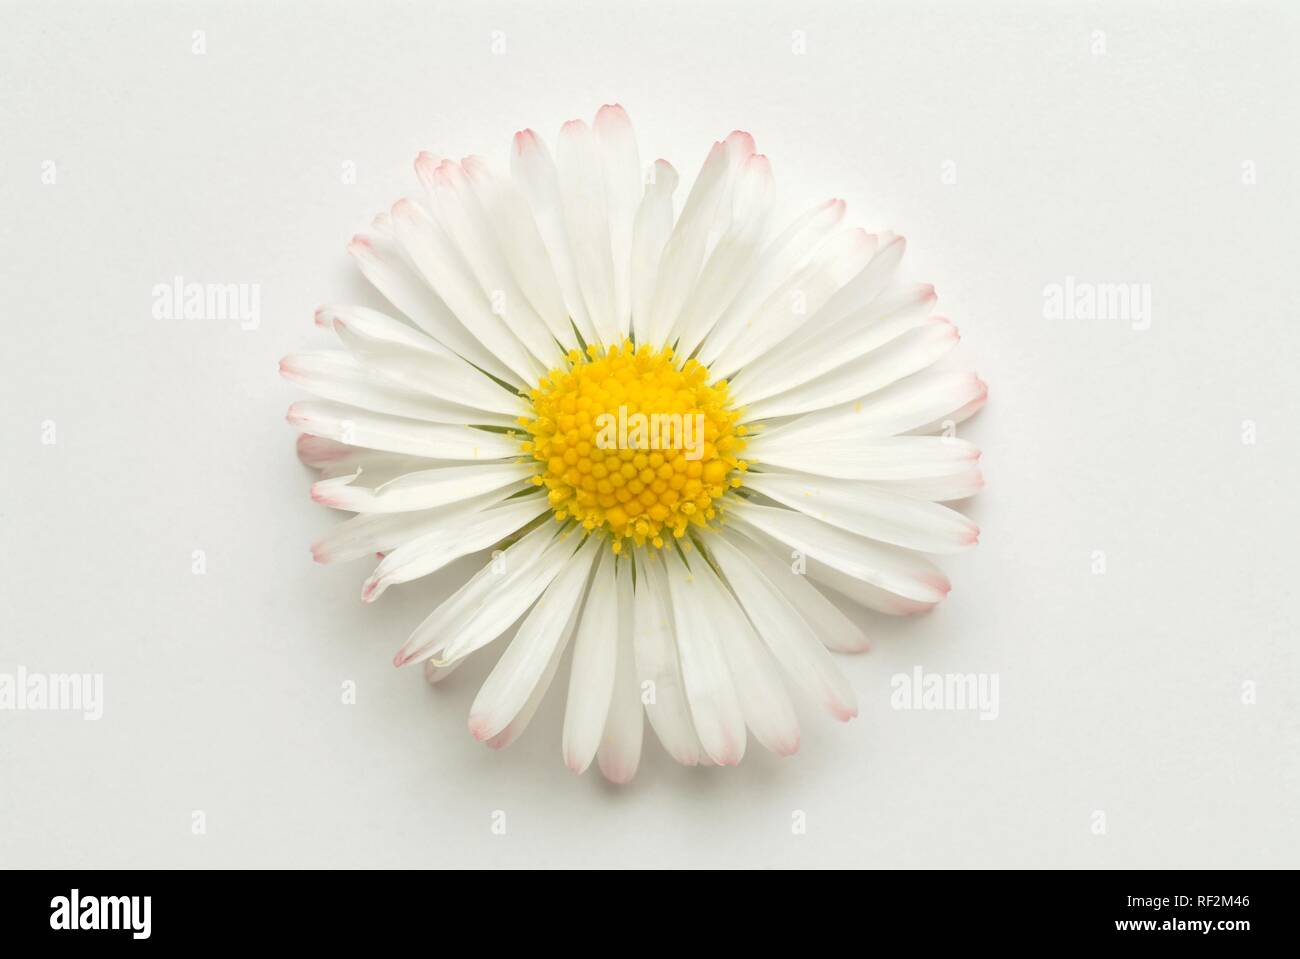 Common Daisy, Lawn Daisy or English Daisy (Bellis perennis), medicinal plant Stock Photo